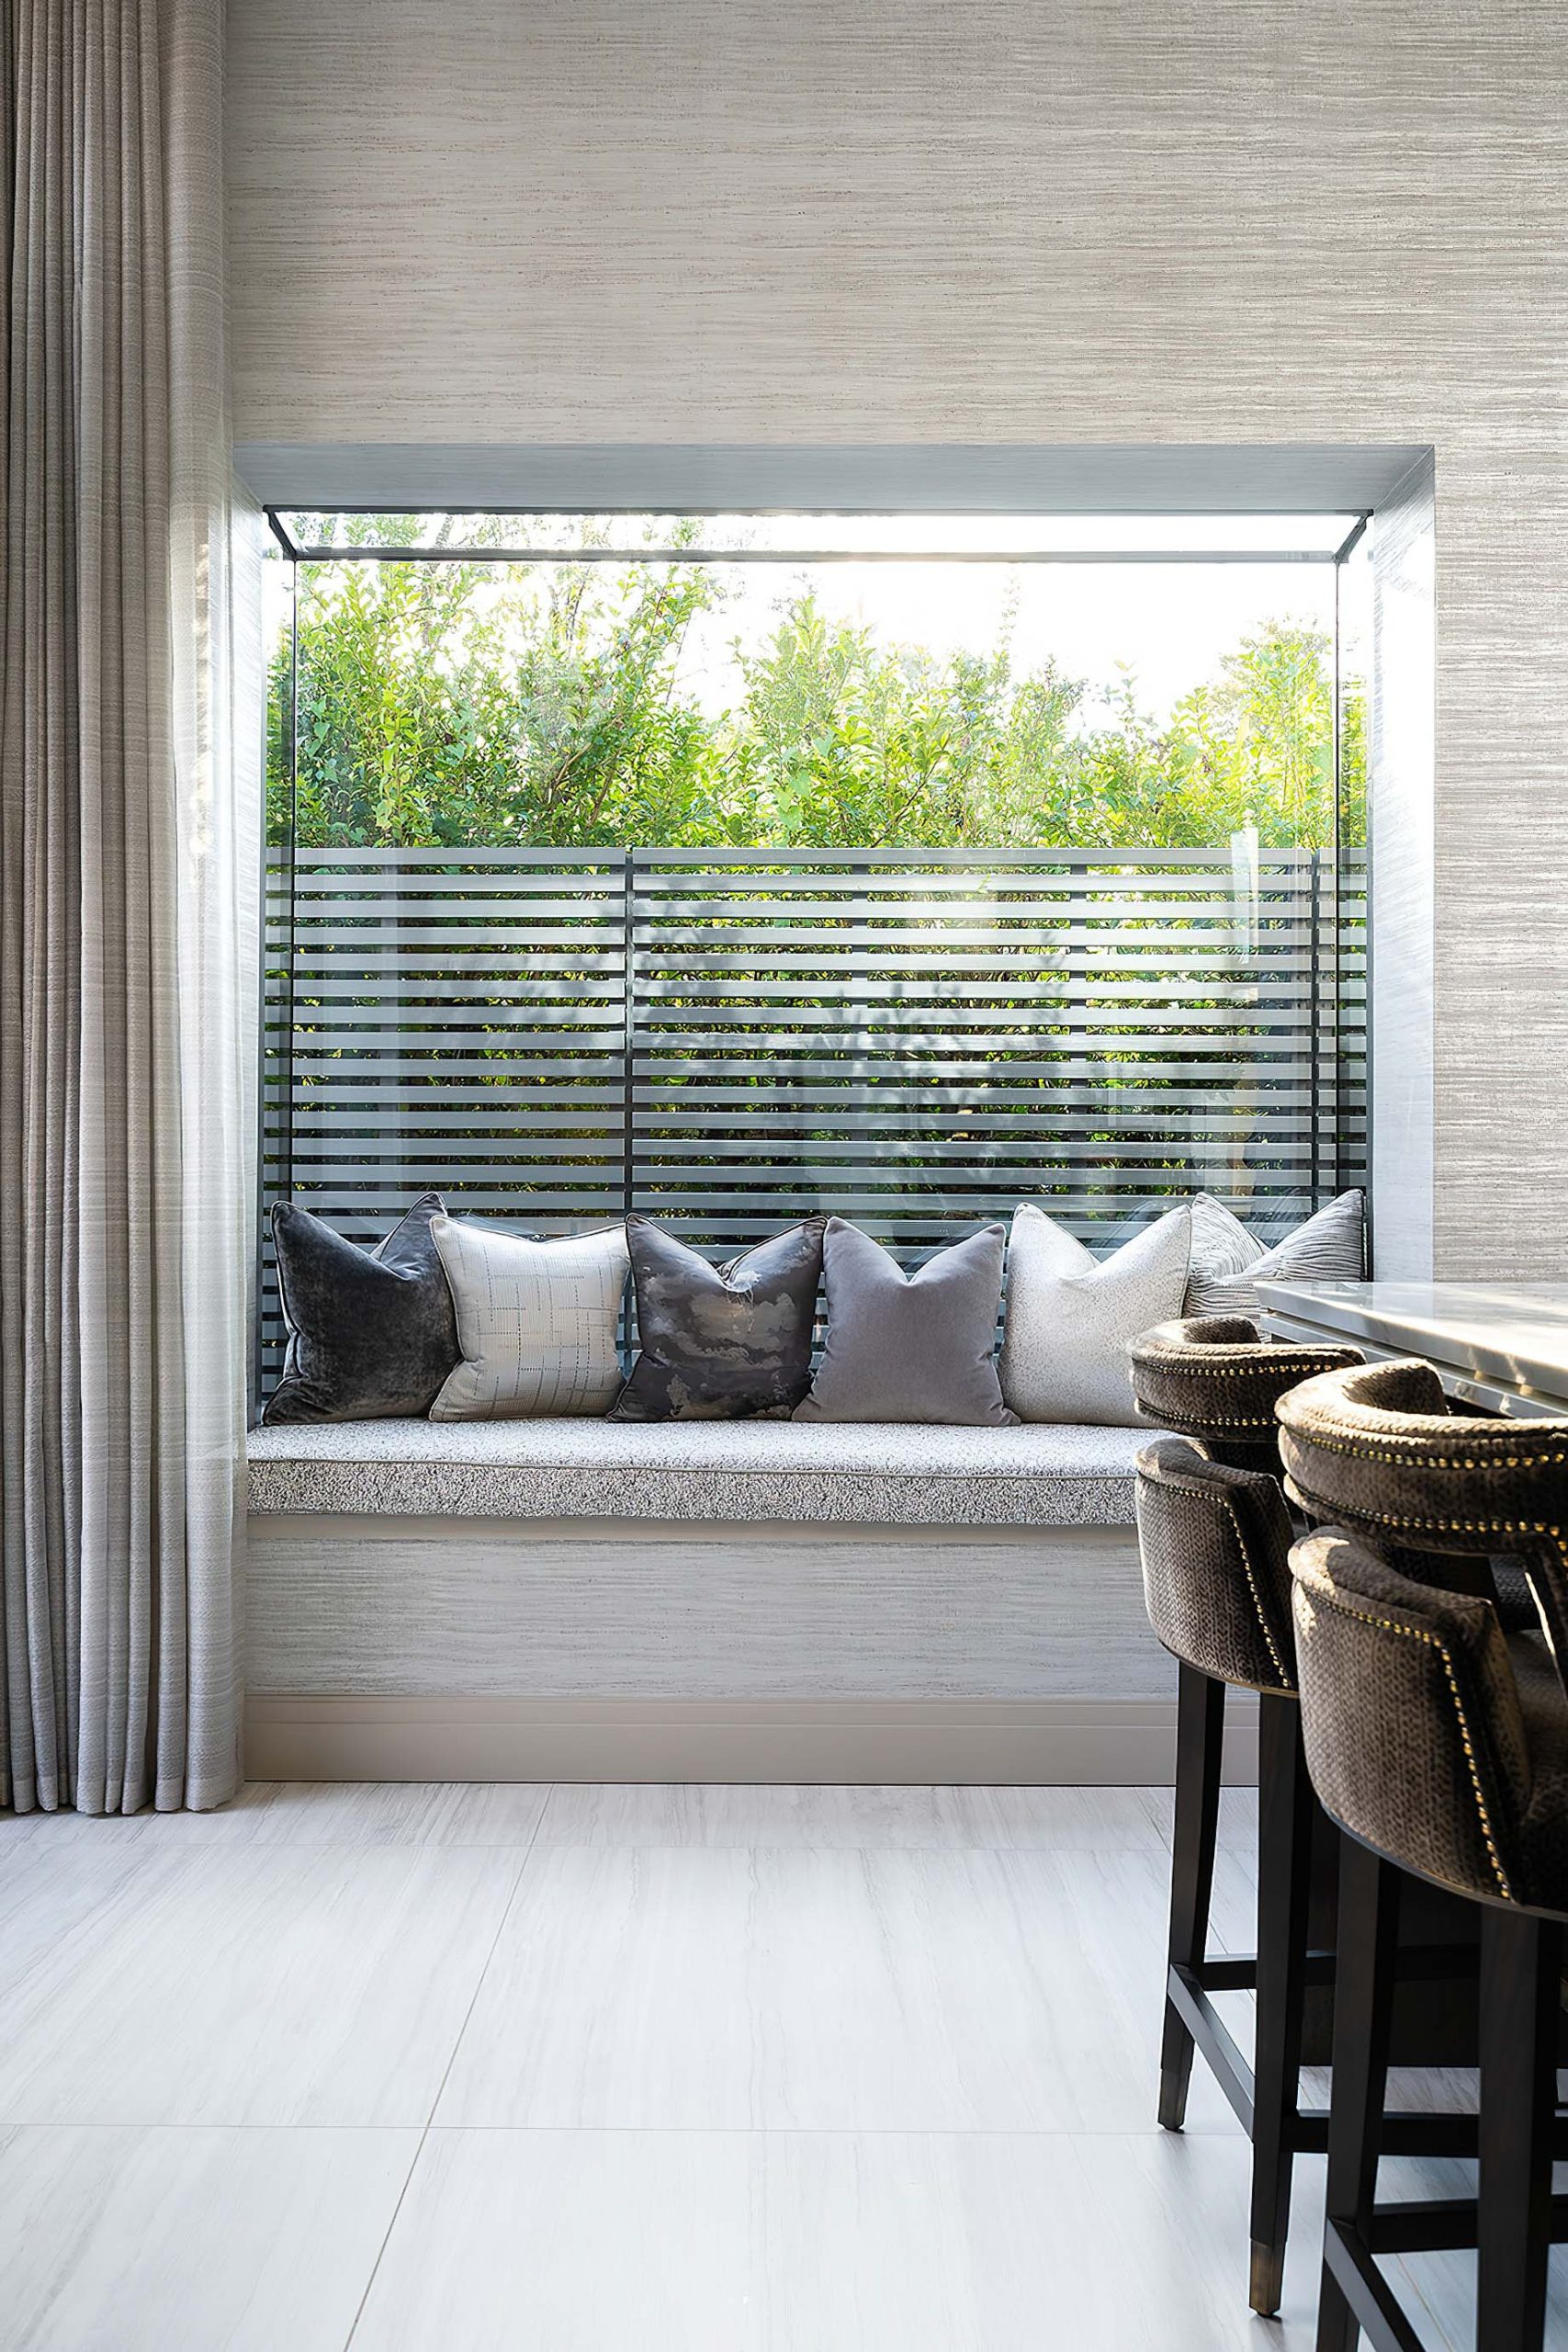 Kensington Home Interior Design London, UK – Kris Turnbull